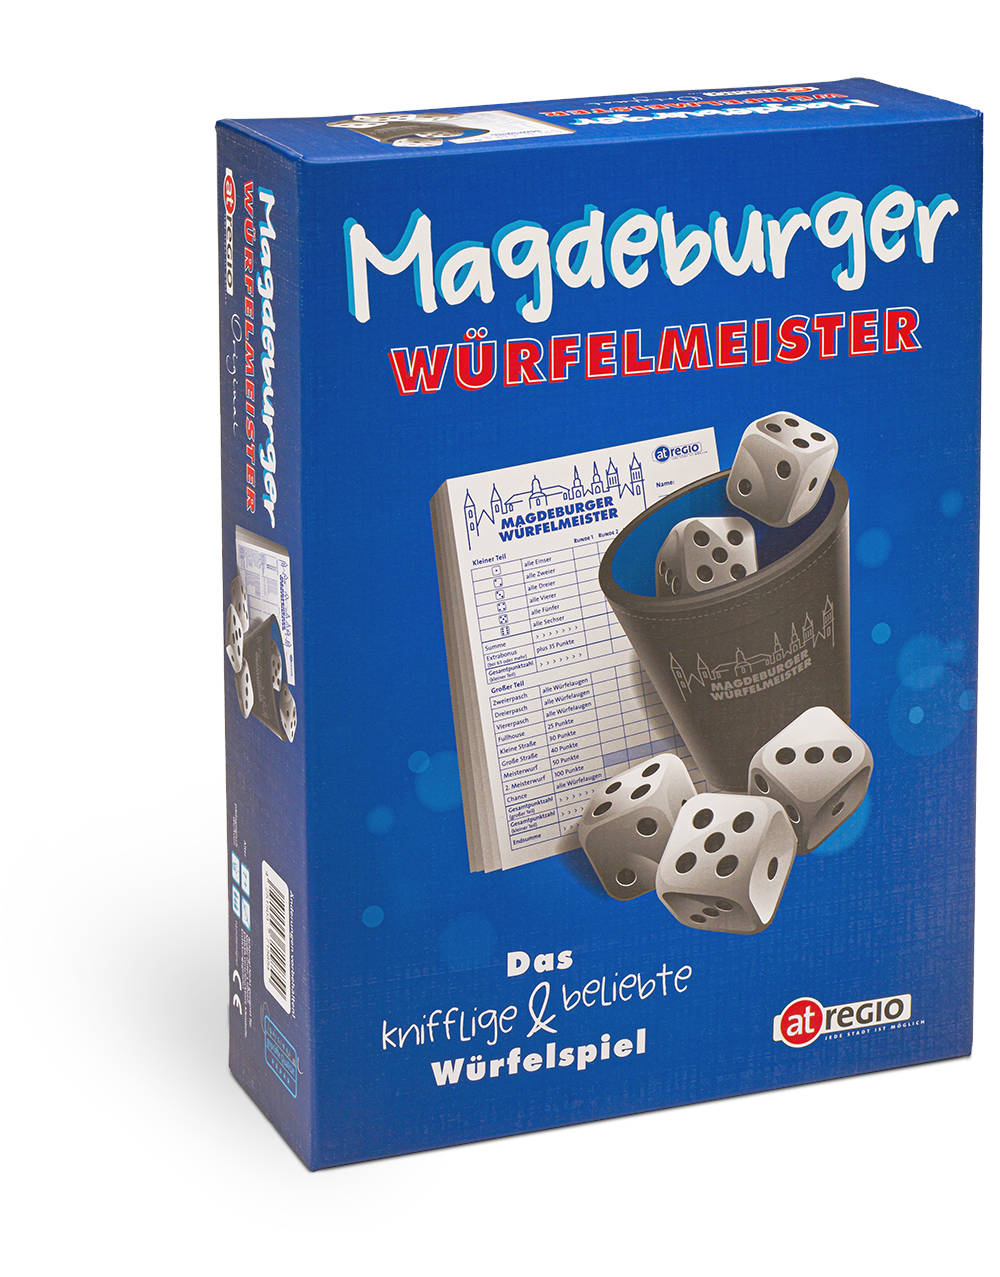 Magdeburger Würfelmeister